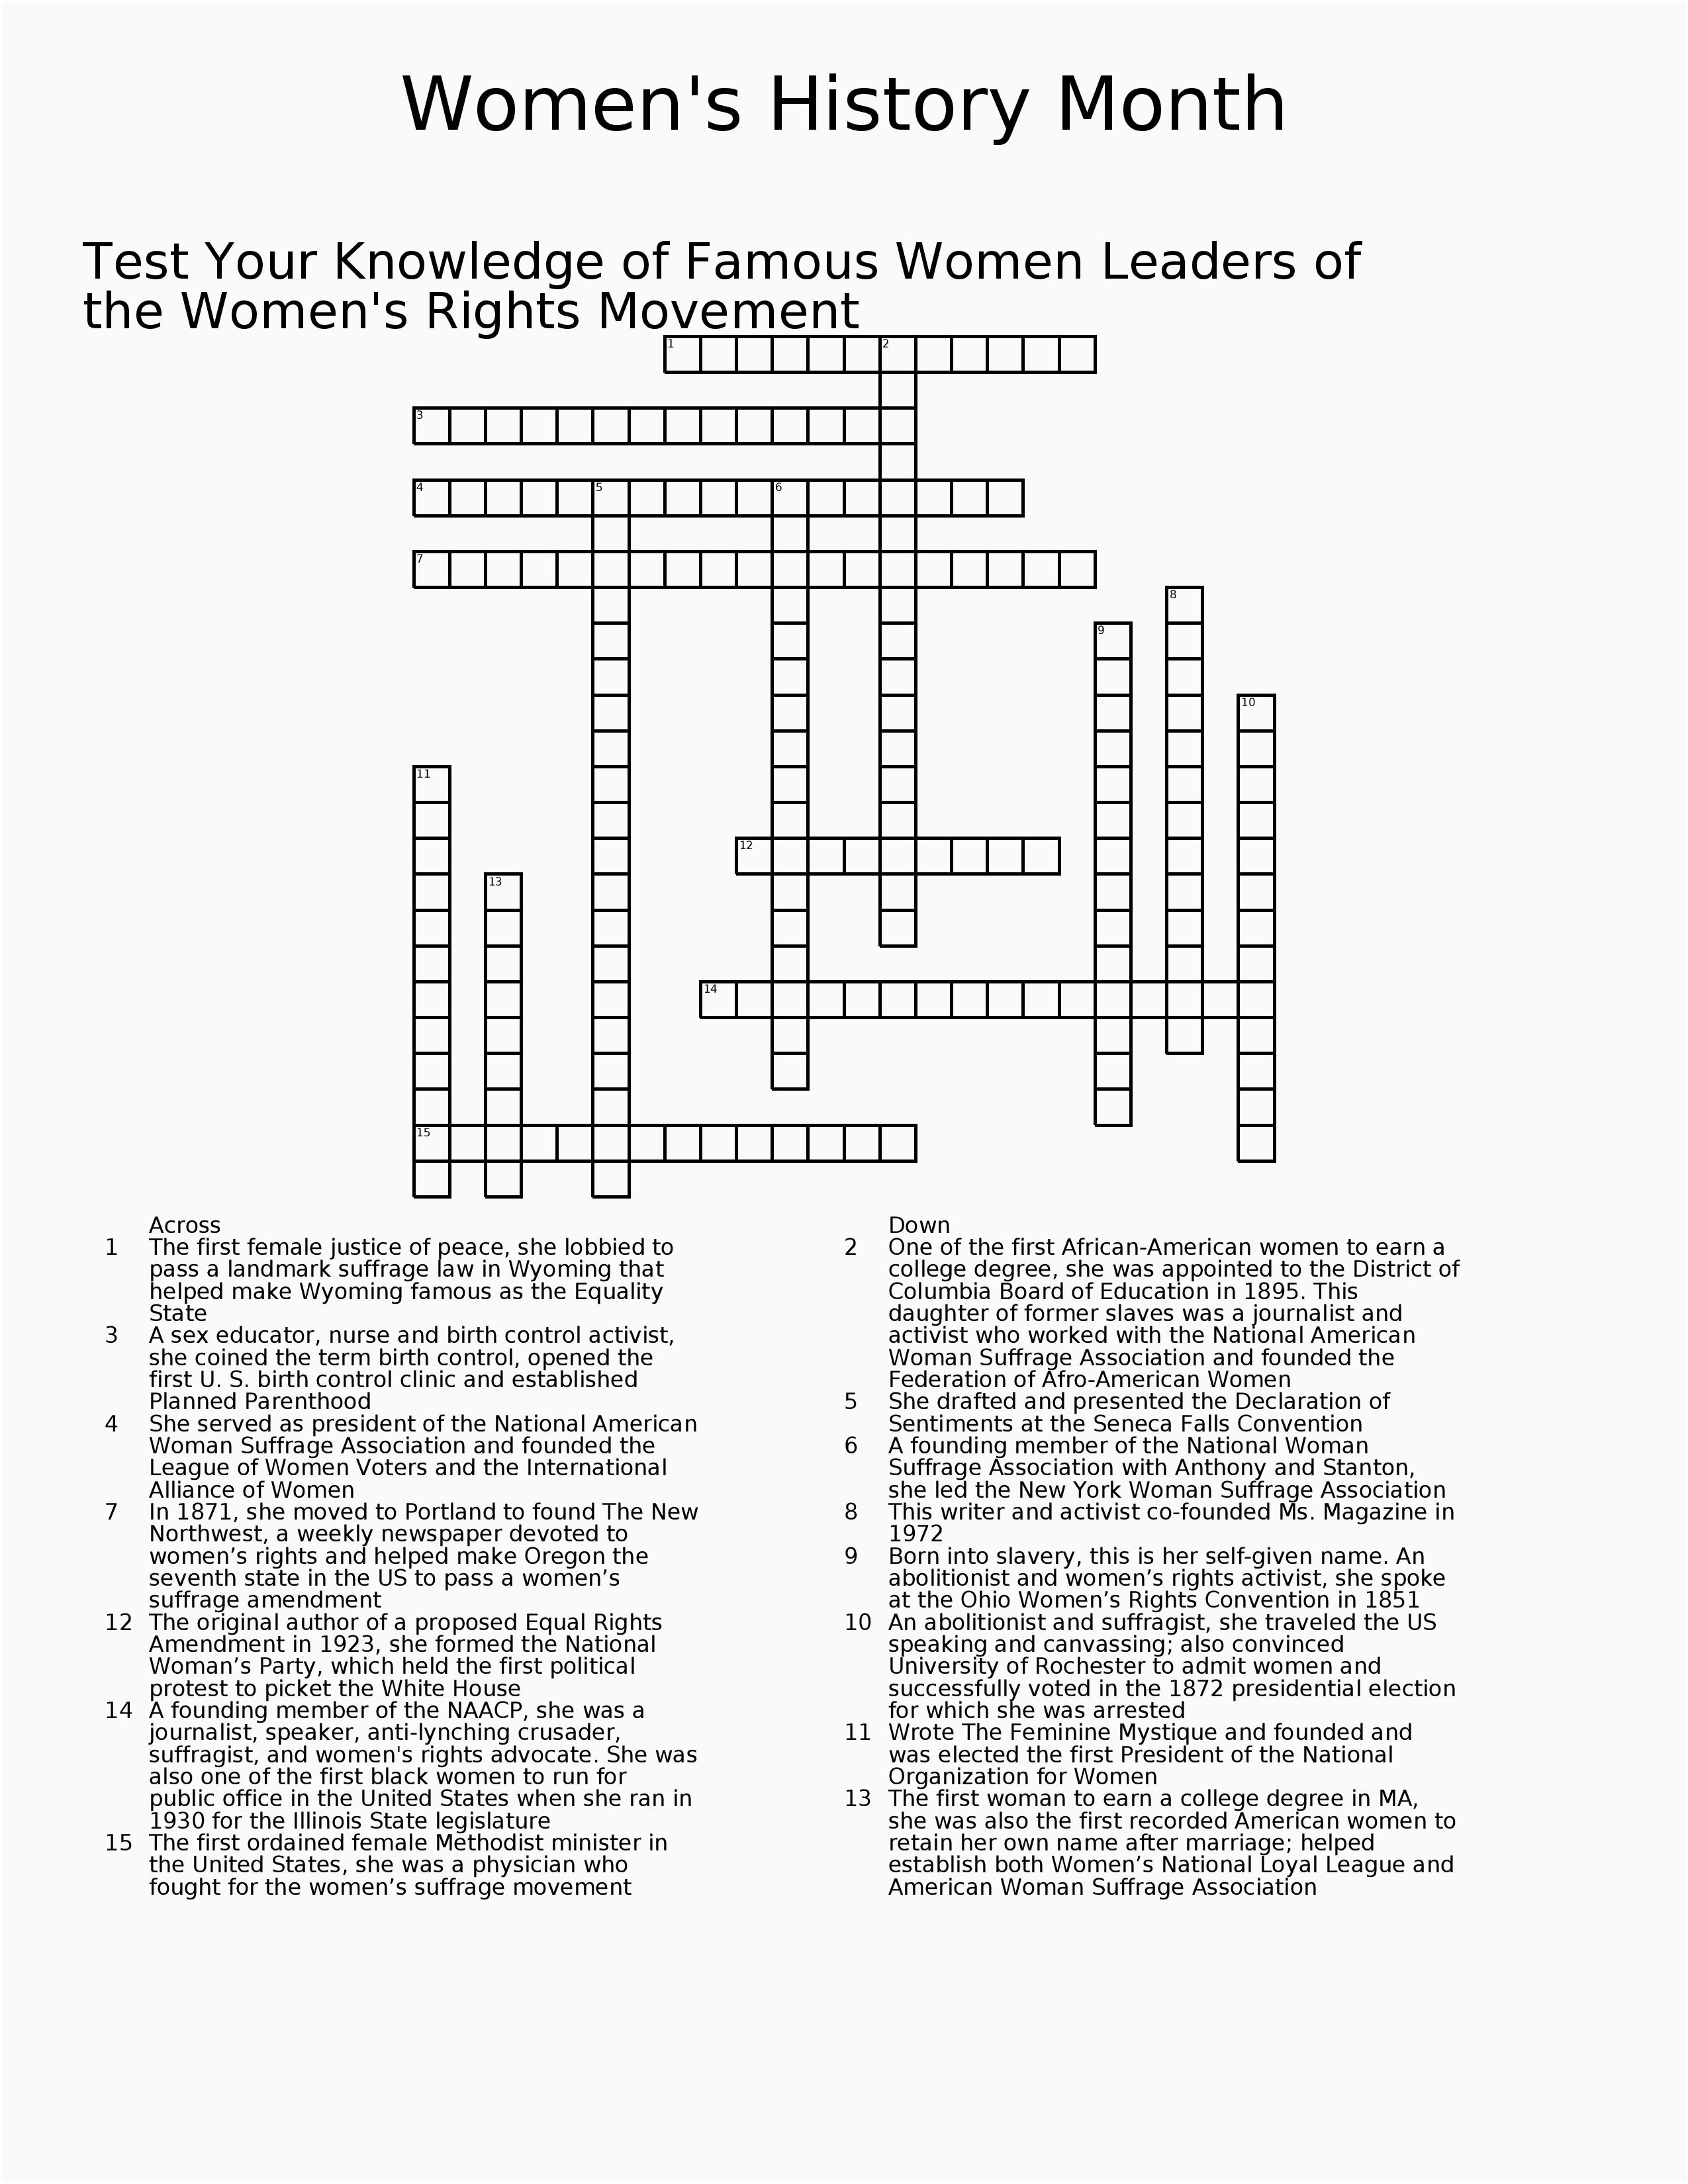 Black History Crossword Puzzle Printable – Open-Source-Design - Black History Crossword Puzzle Printable